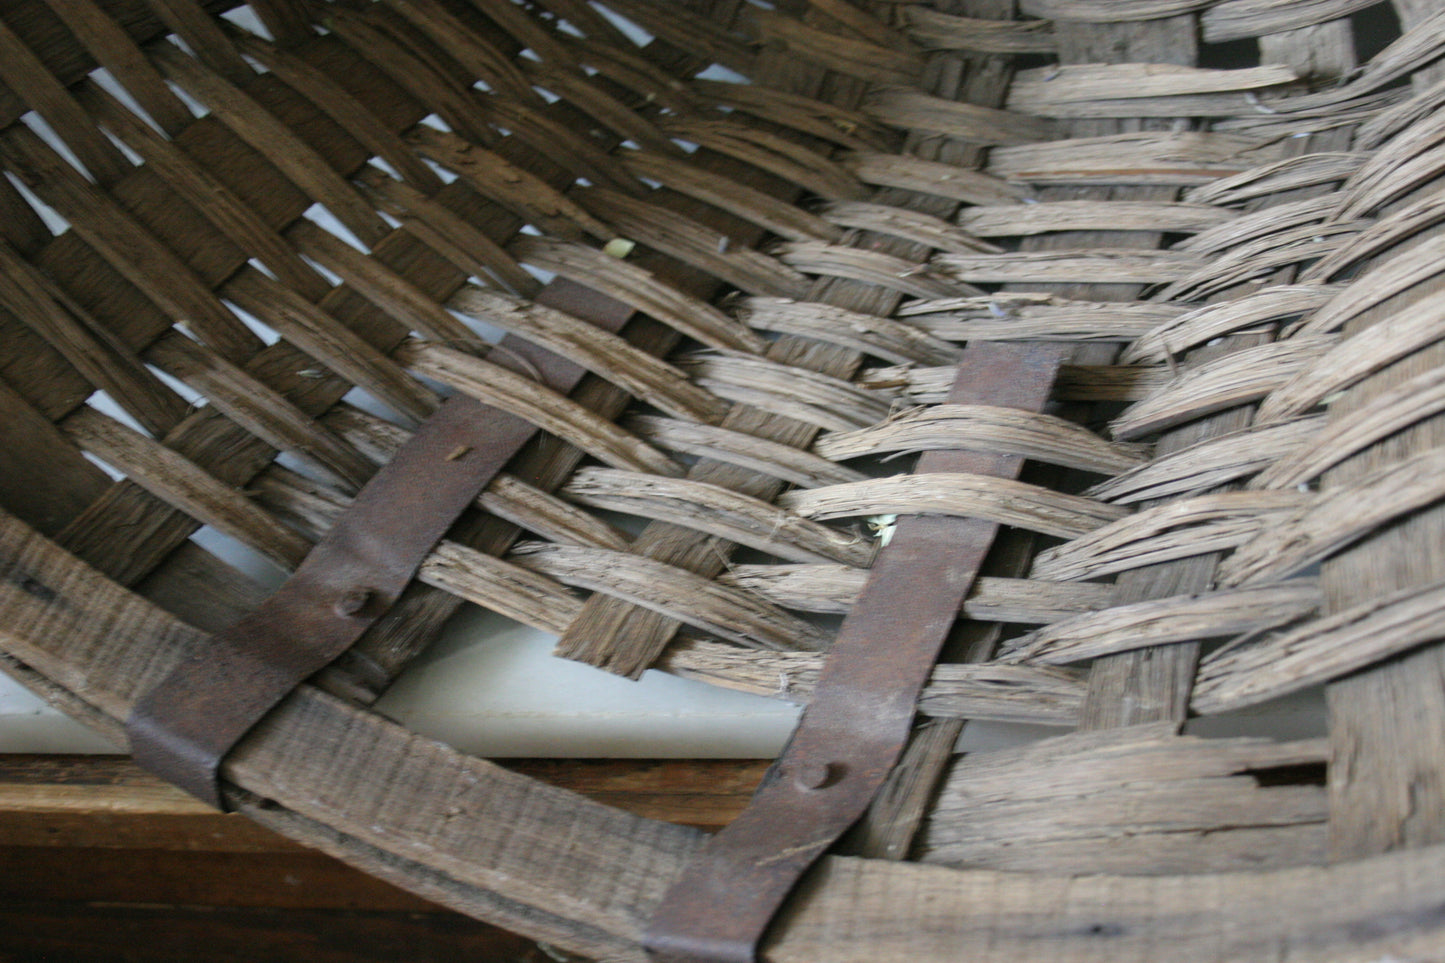 Antique rare wood & metal gathering basket | primitive